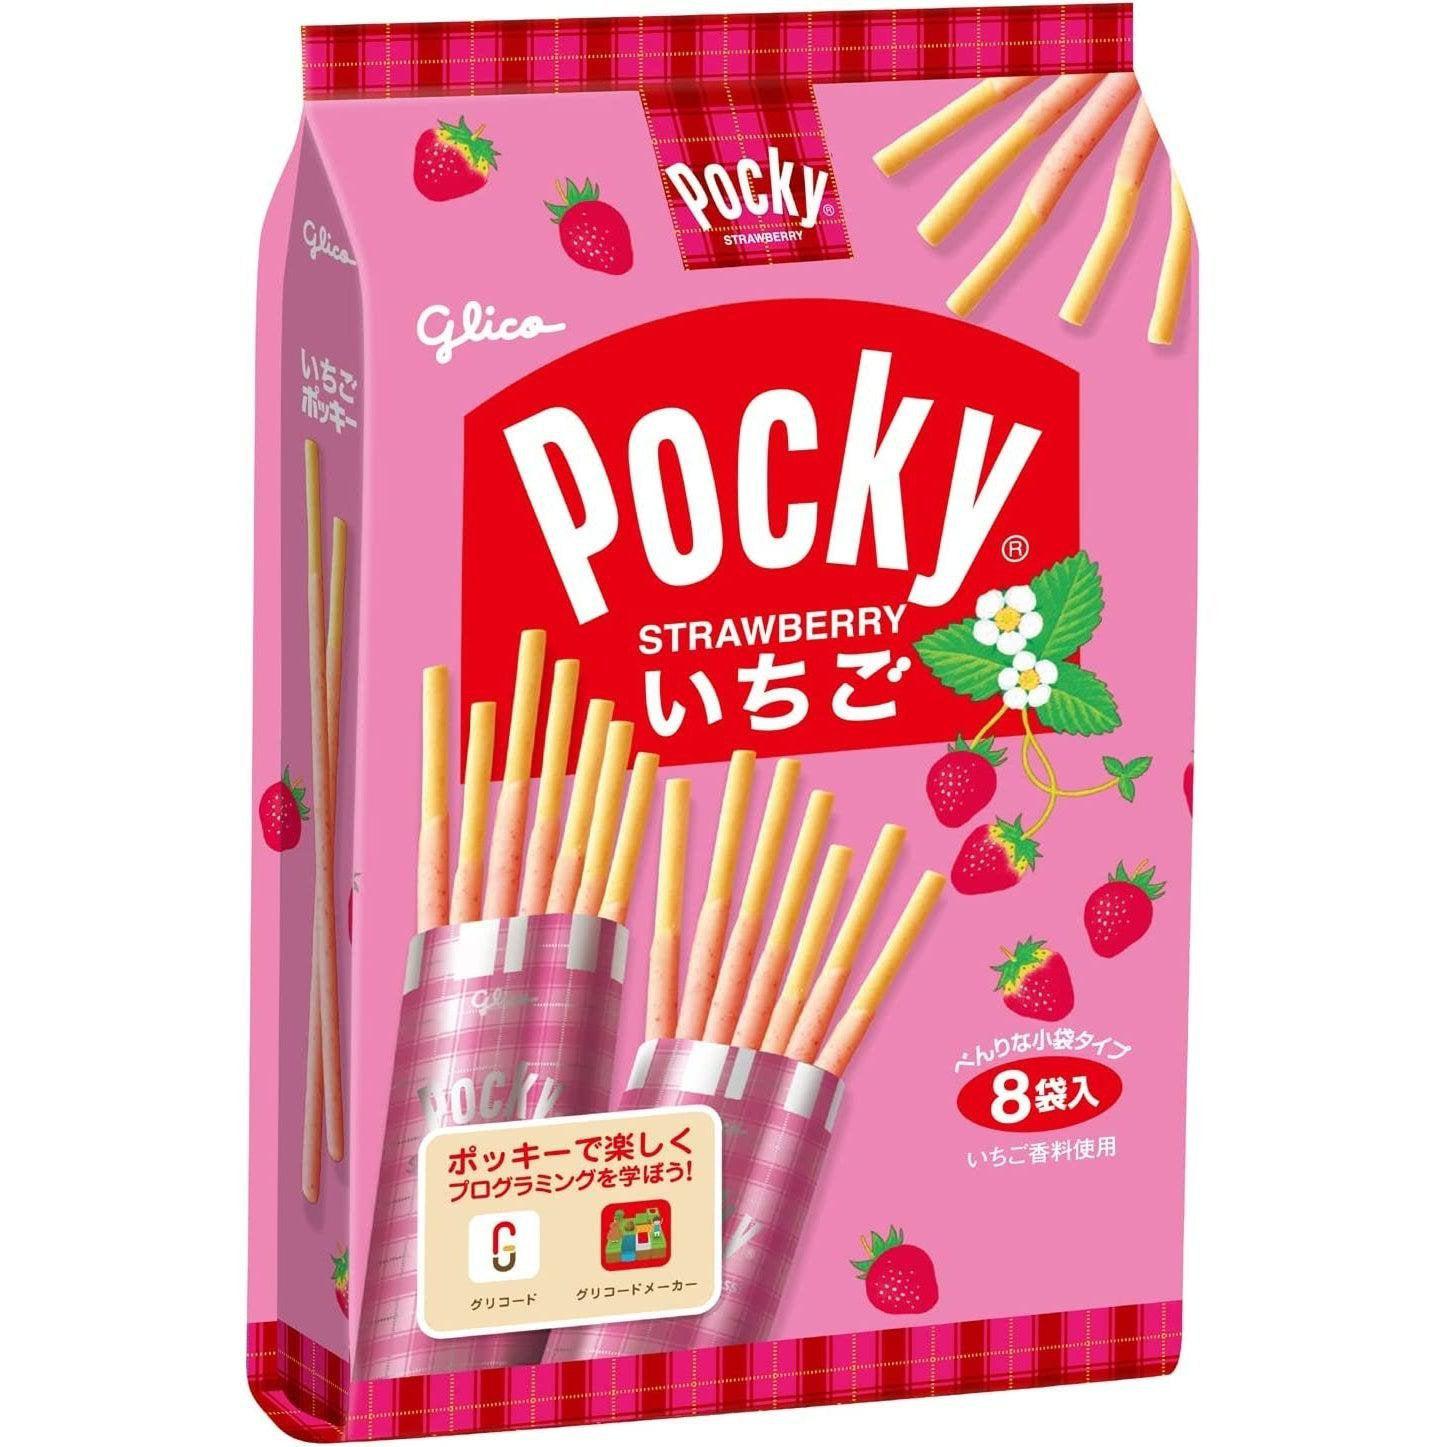 Glico Strawberry Pocky Strawberry Chocolate Biscuit Sticks (Pack of 6)